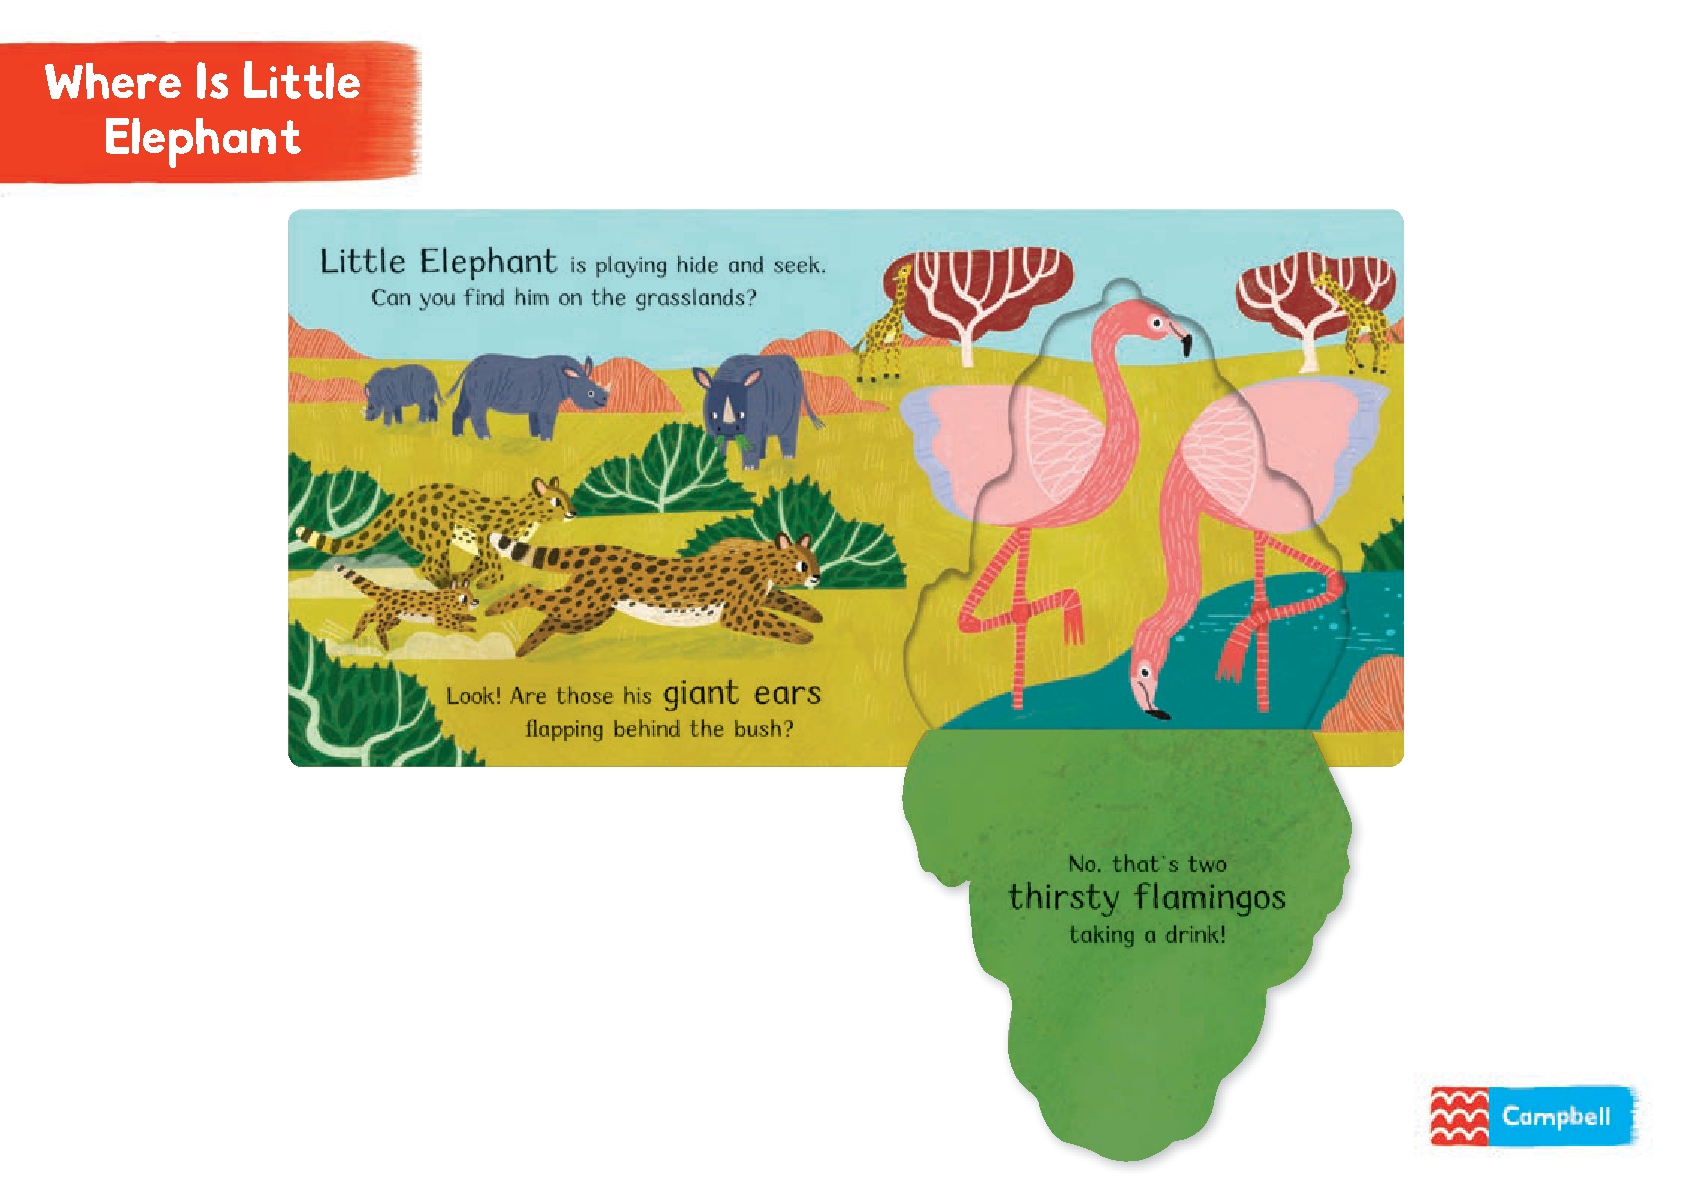 Where is Little Elephant